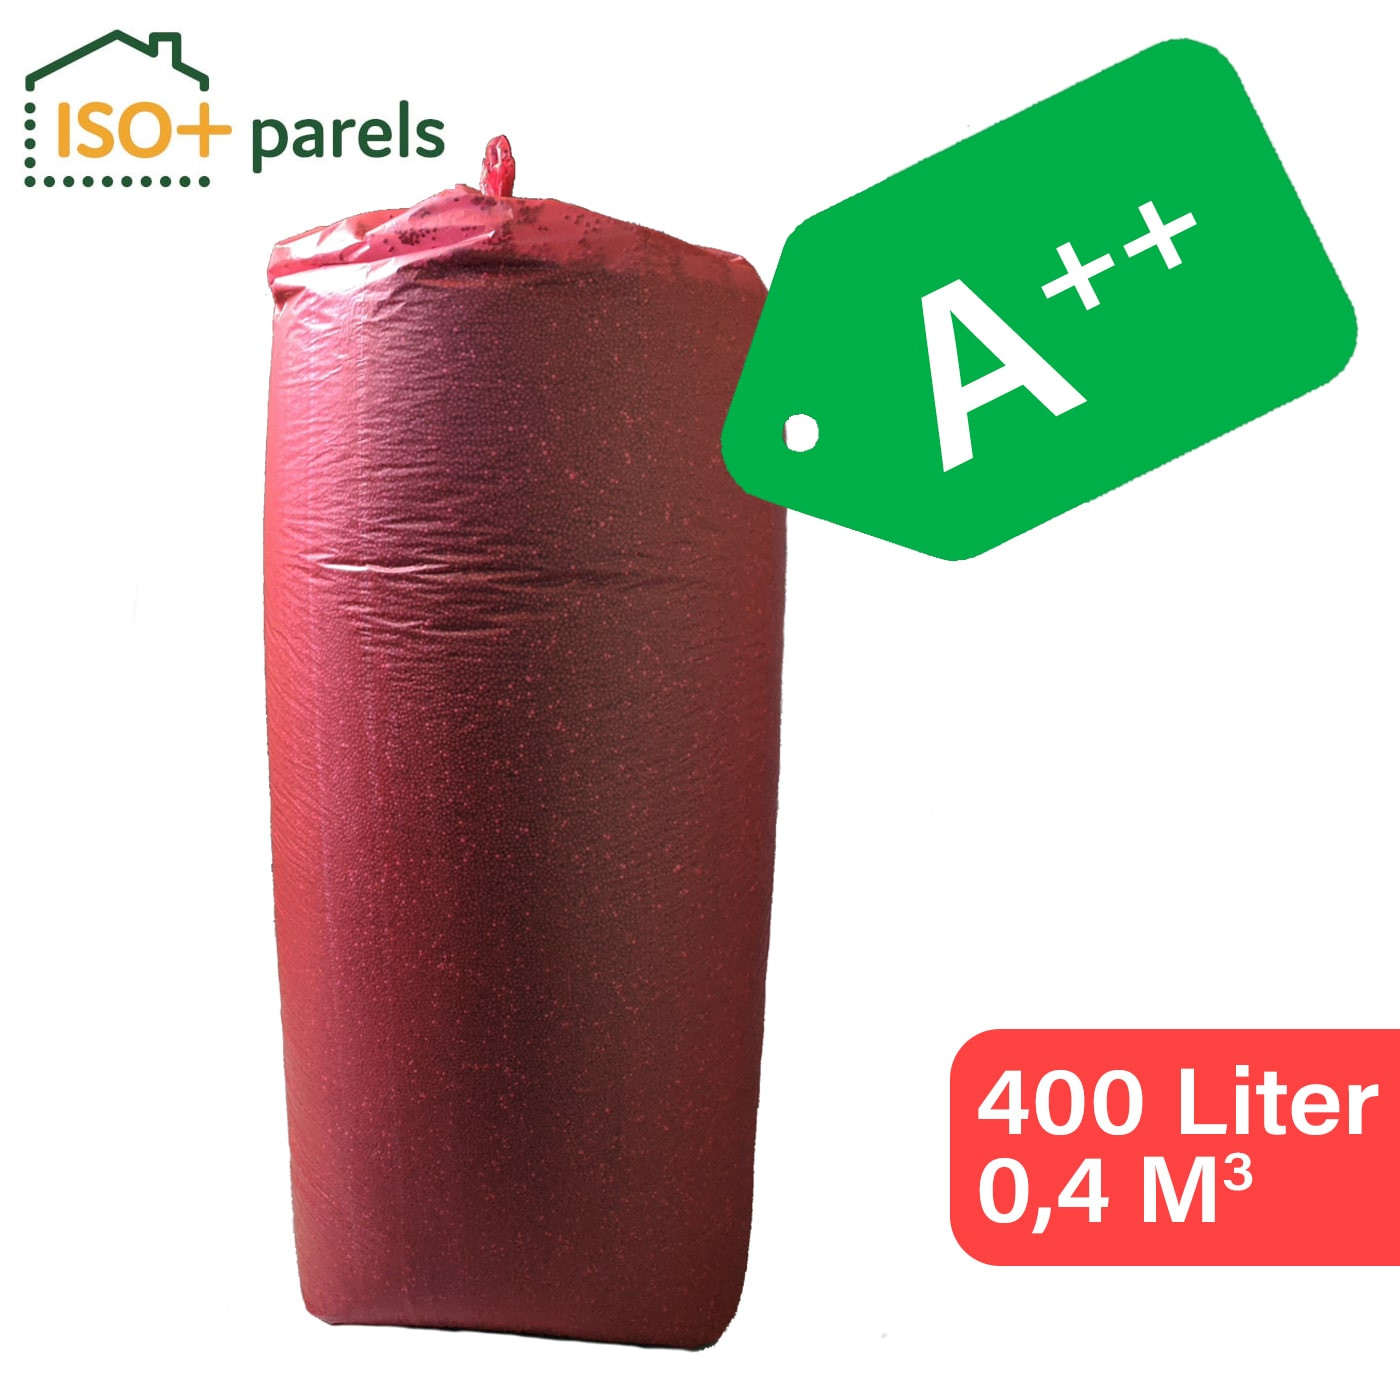 EPS HR++ parels 400 Liter A++ (Isoplusparels)